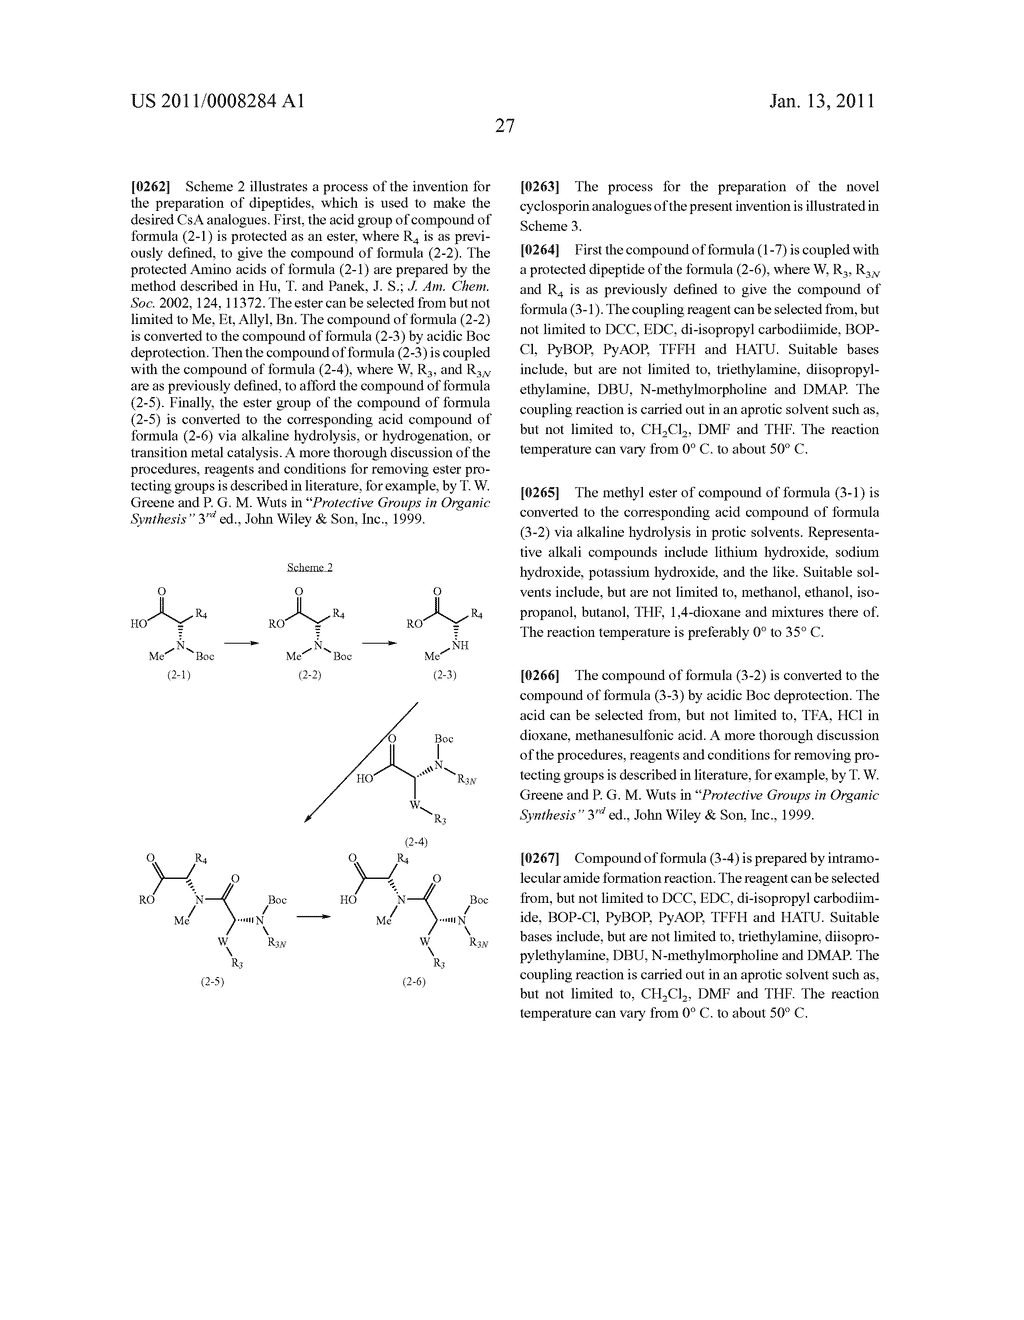 NOVEL CLYCLOSPORIN ANALOGUES - diagram, schematic, and image 28